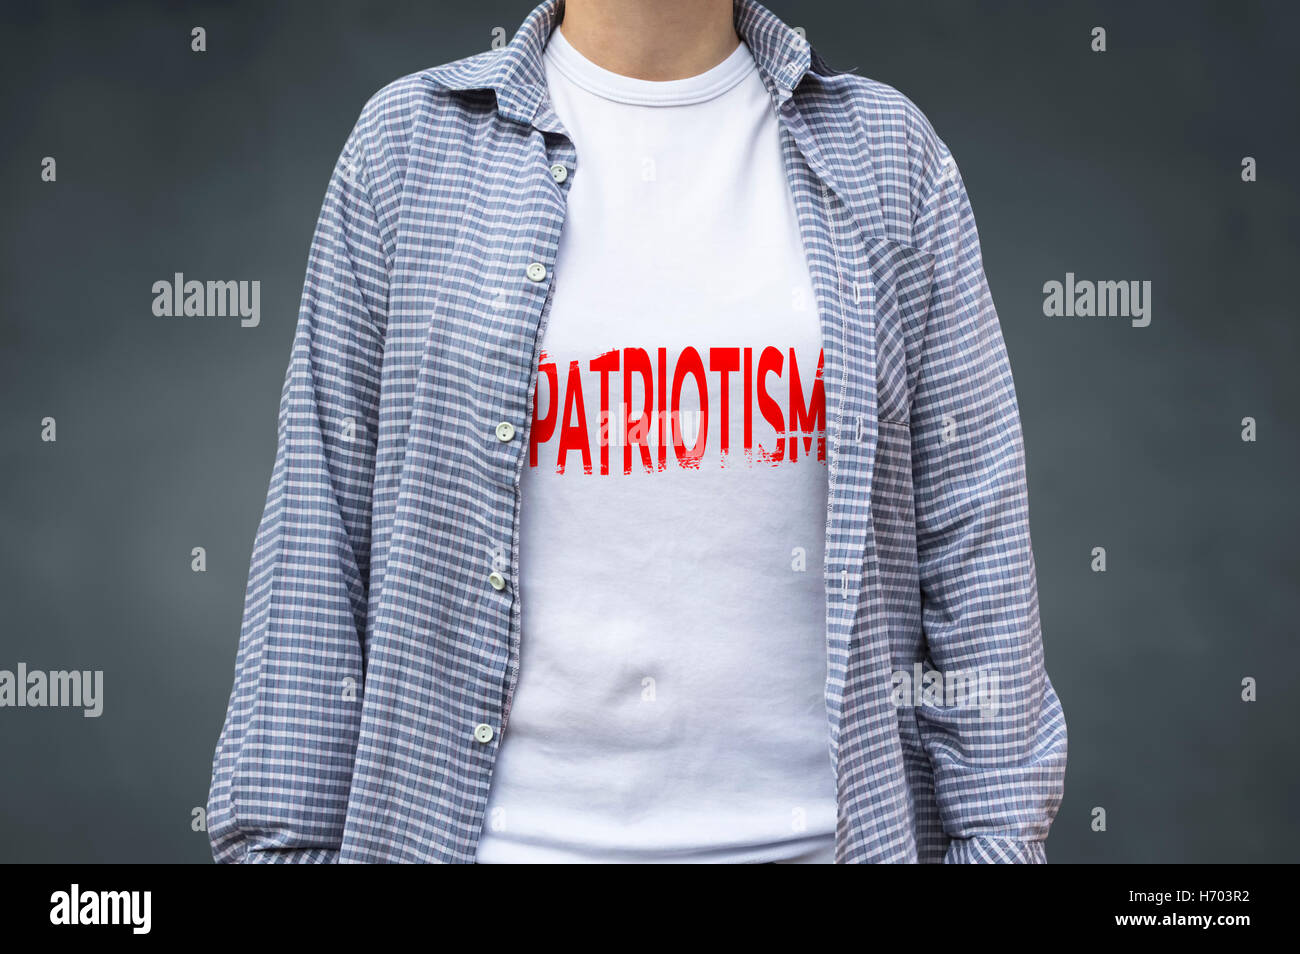 Patriotism print on t-shirt, political message. Selective focus. Stock Photo